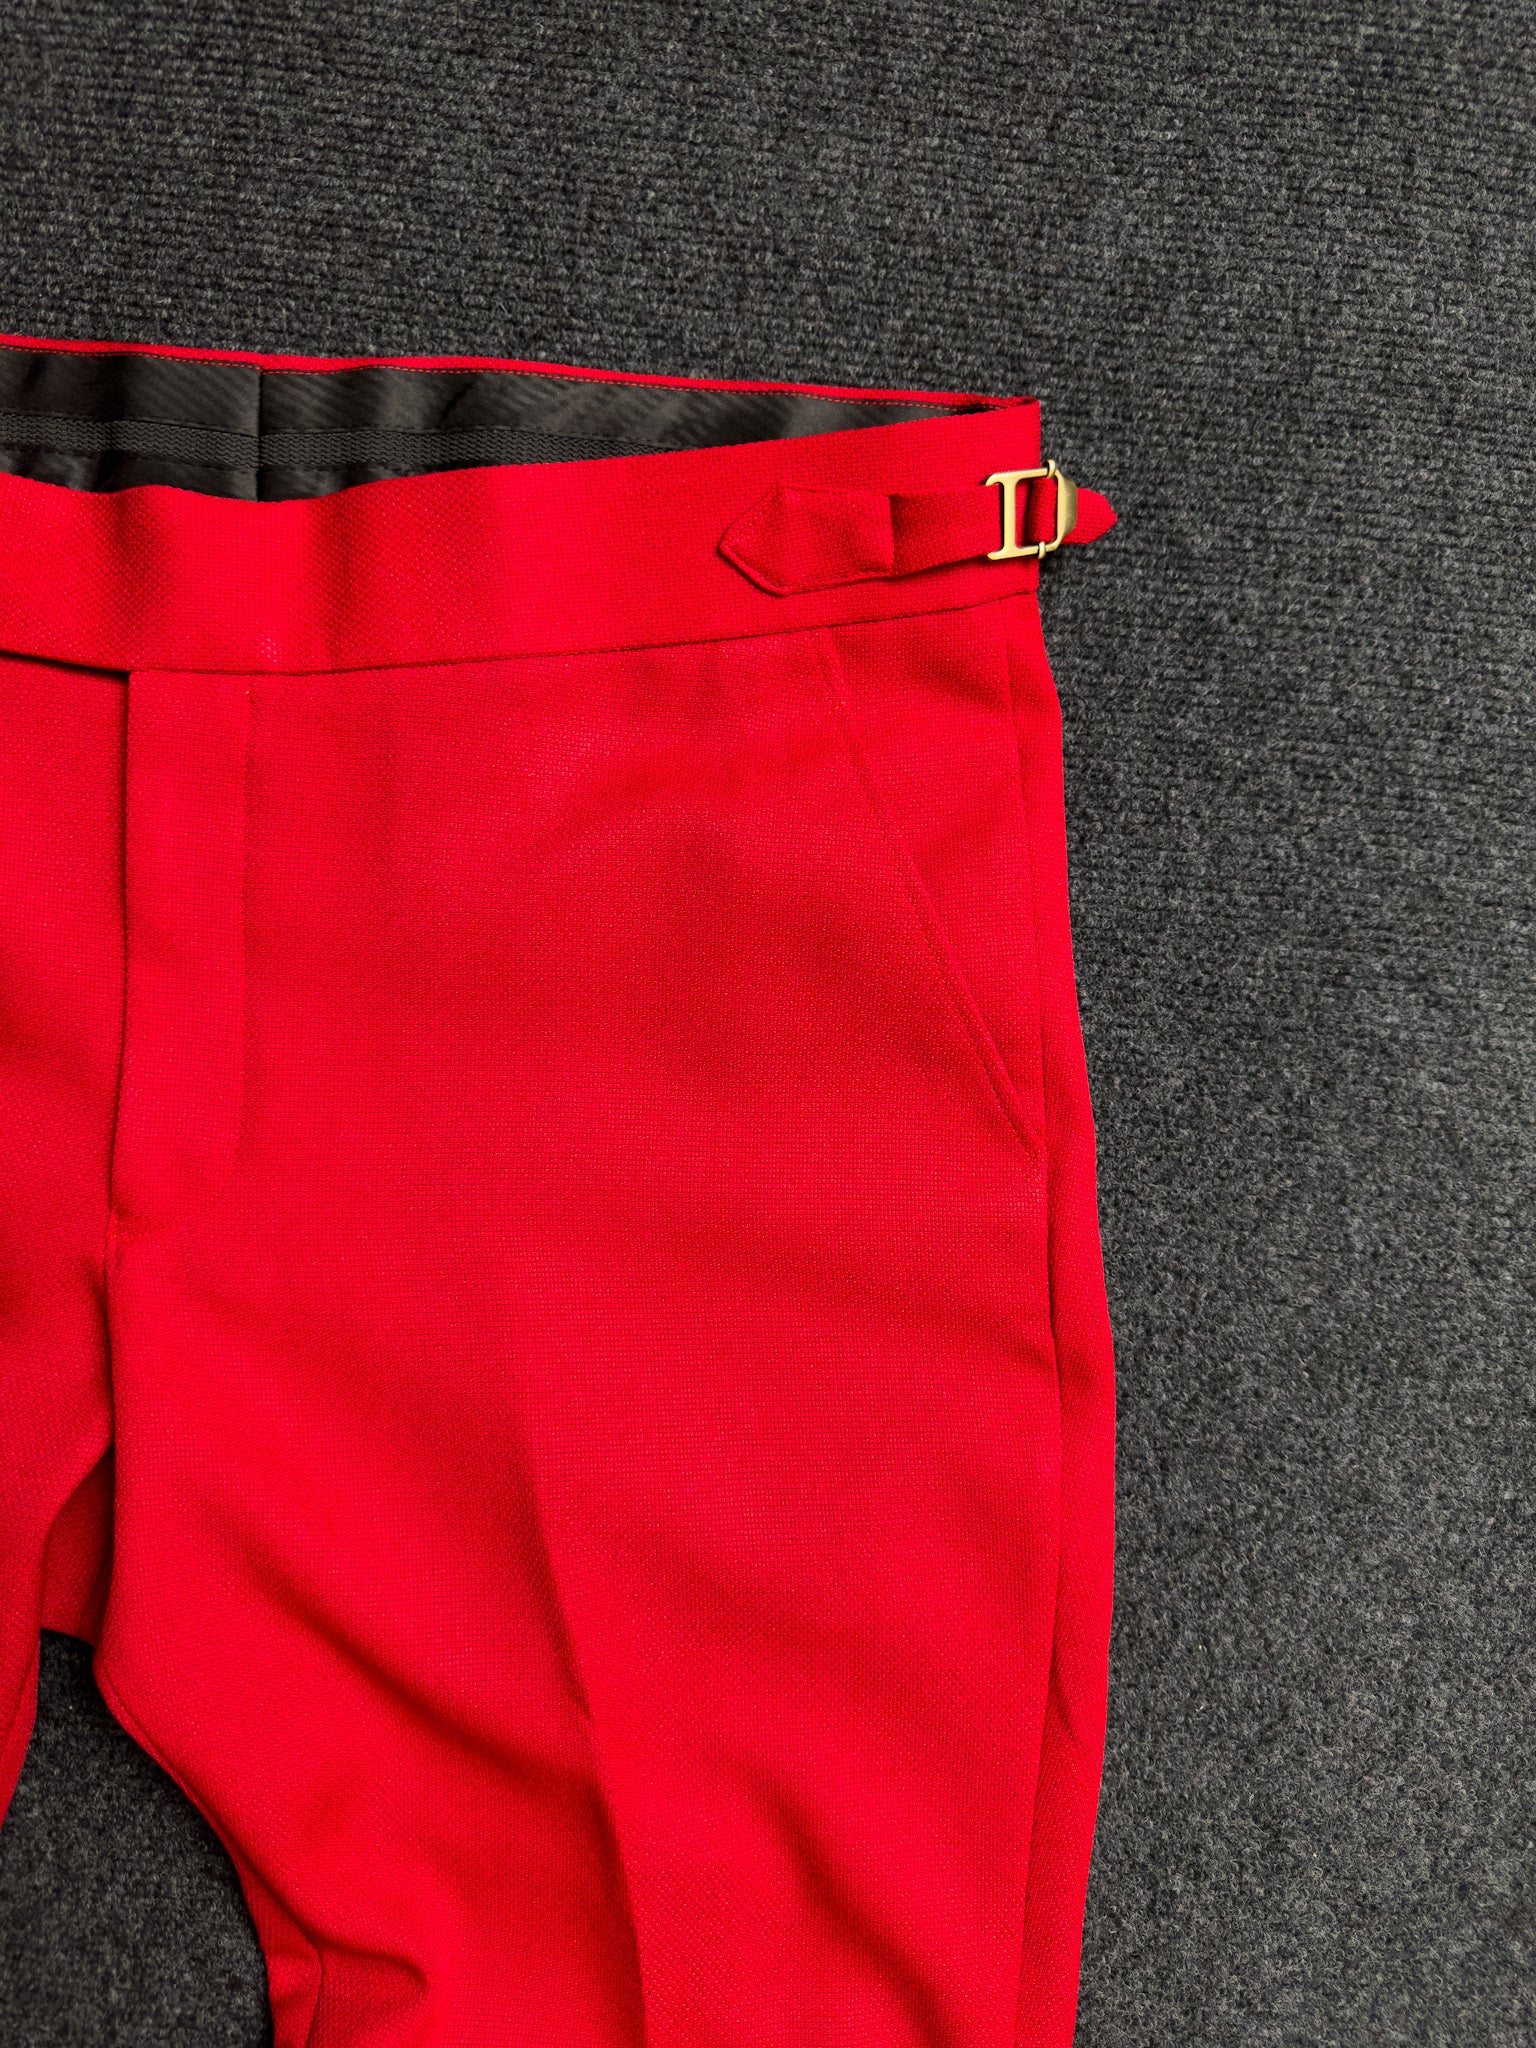 60's-style men's slacks — where to buy? | Men's Clothing Forums